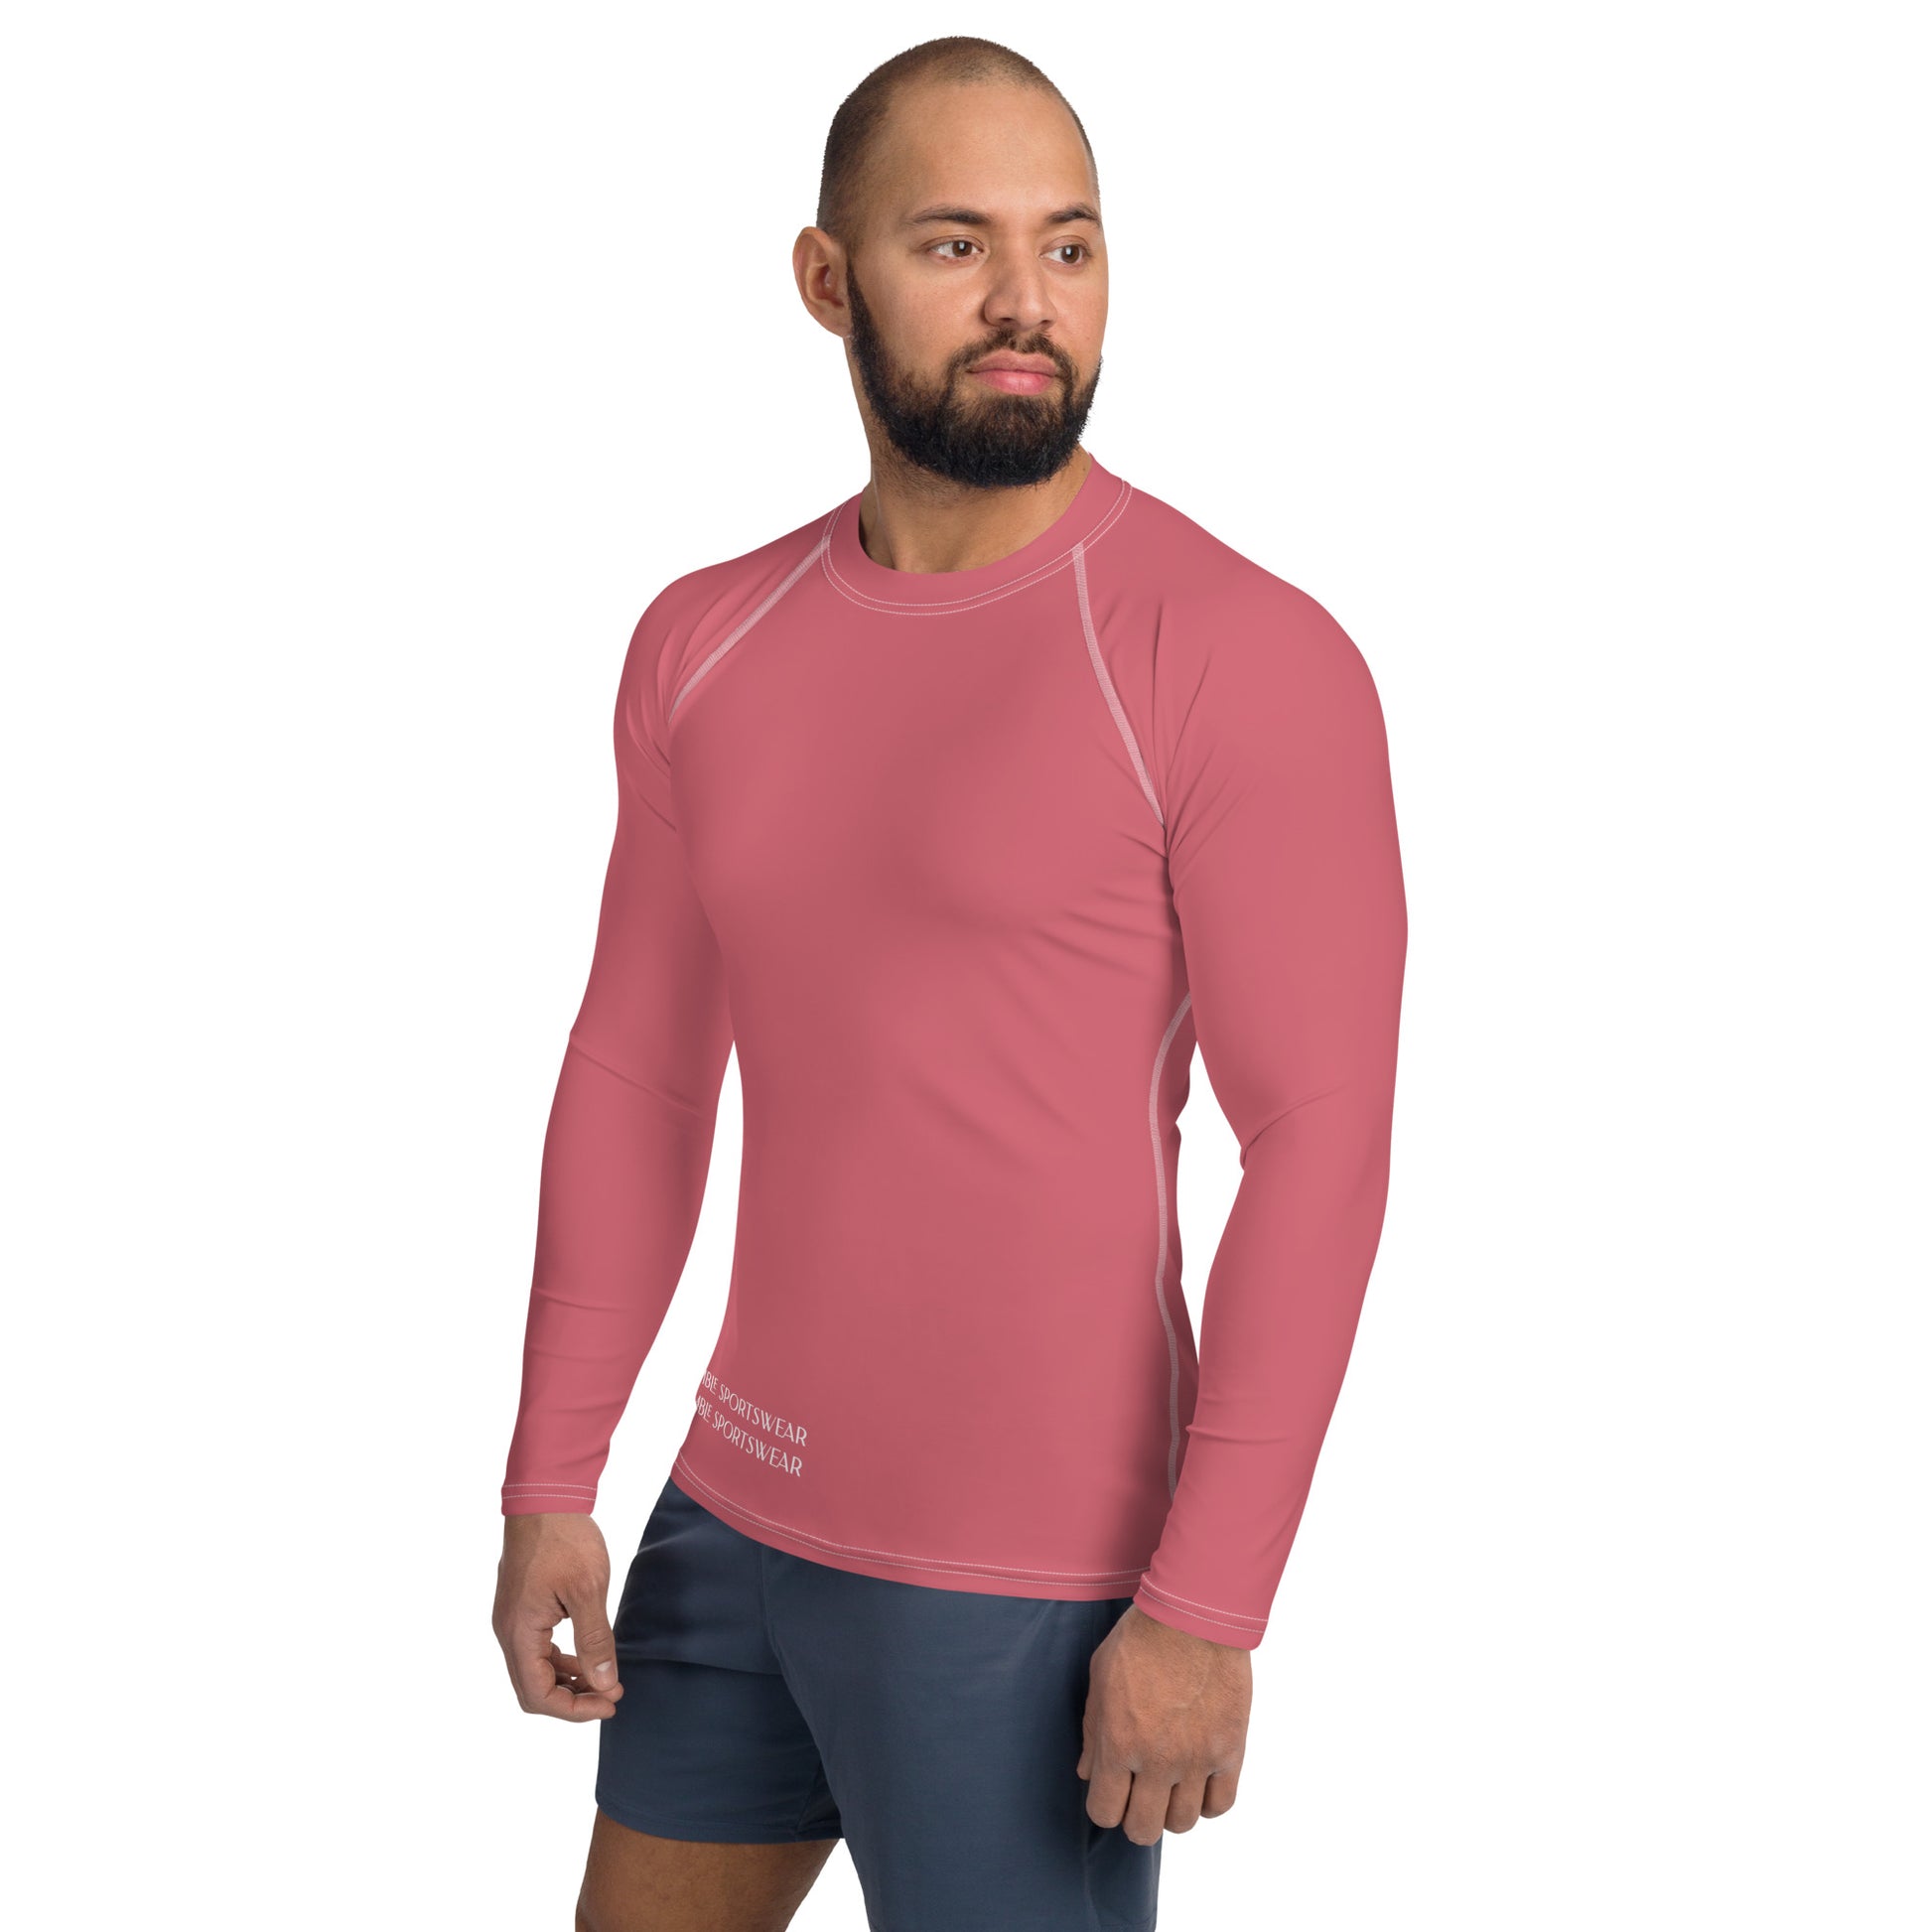 Humble Sportswear™ Men's Froly Pink Rash Guard - Mireille Fine Art